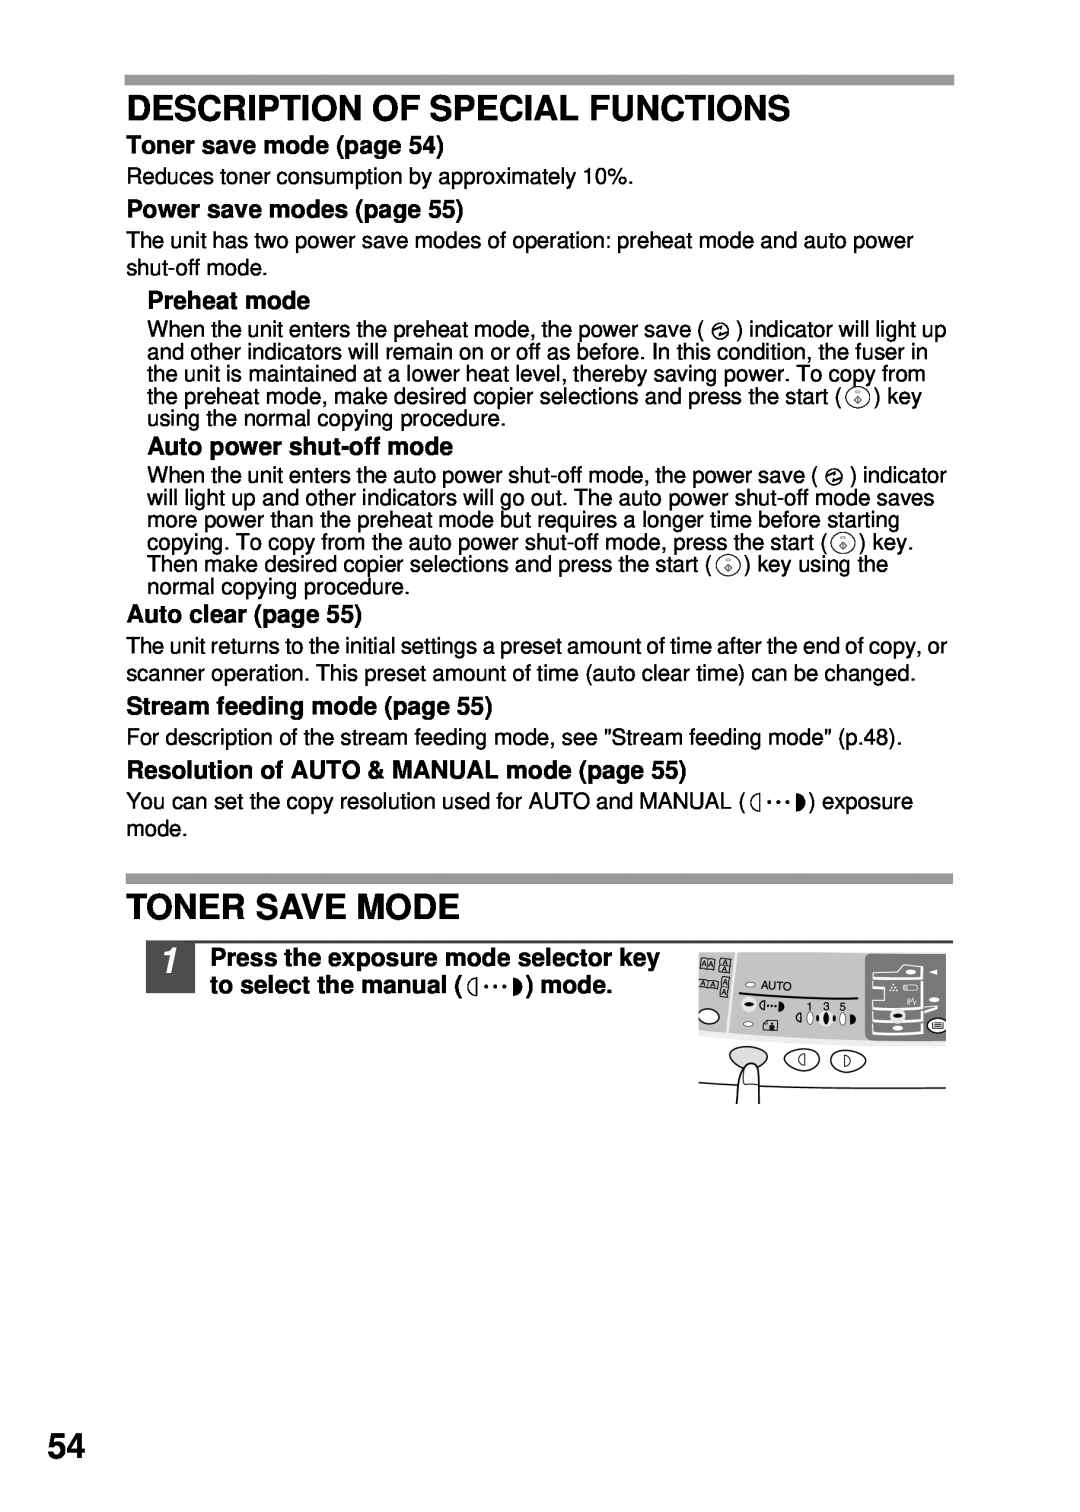 Sharp AL-1555 Description Of Special Functions, Toner Save Mode, Toner save mode page, Power save modes page, Preheat mode 